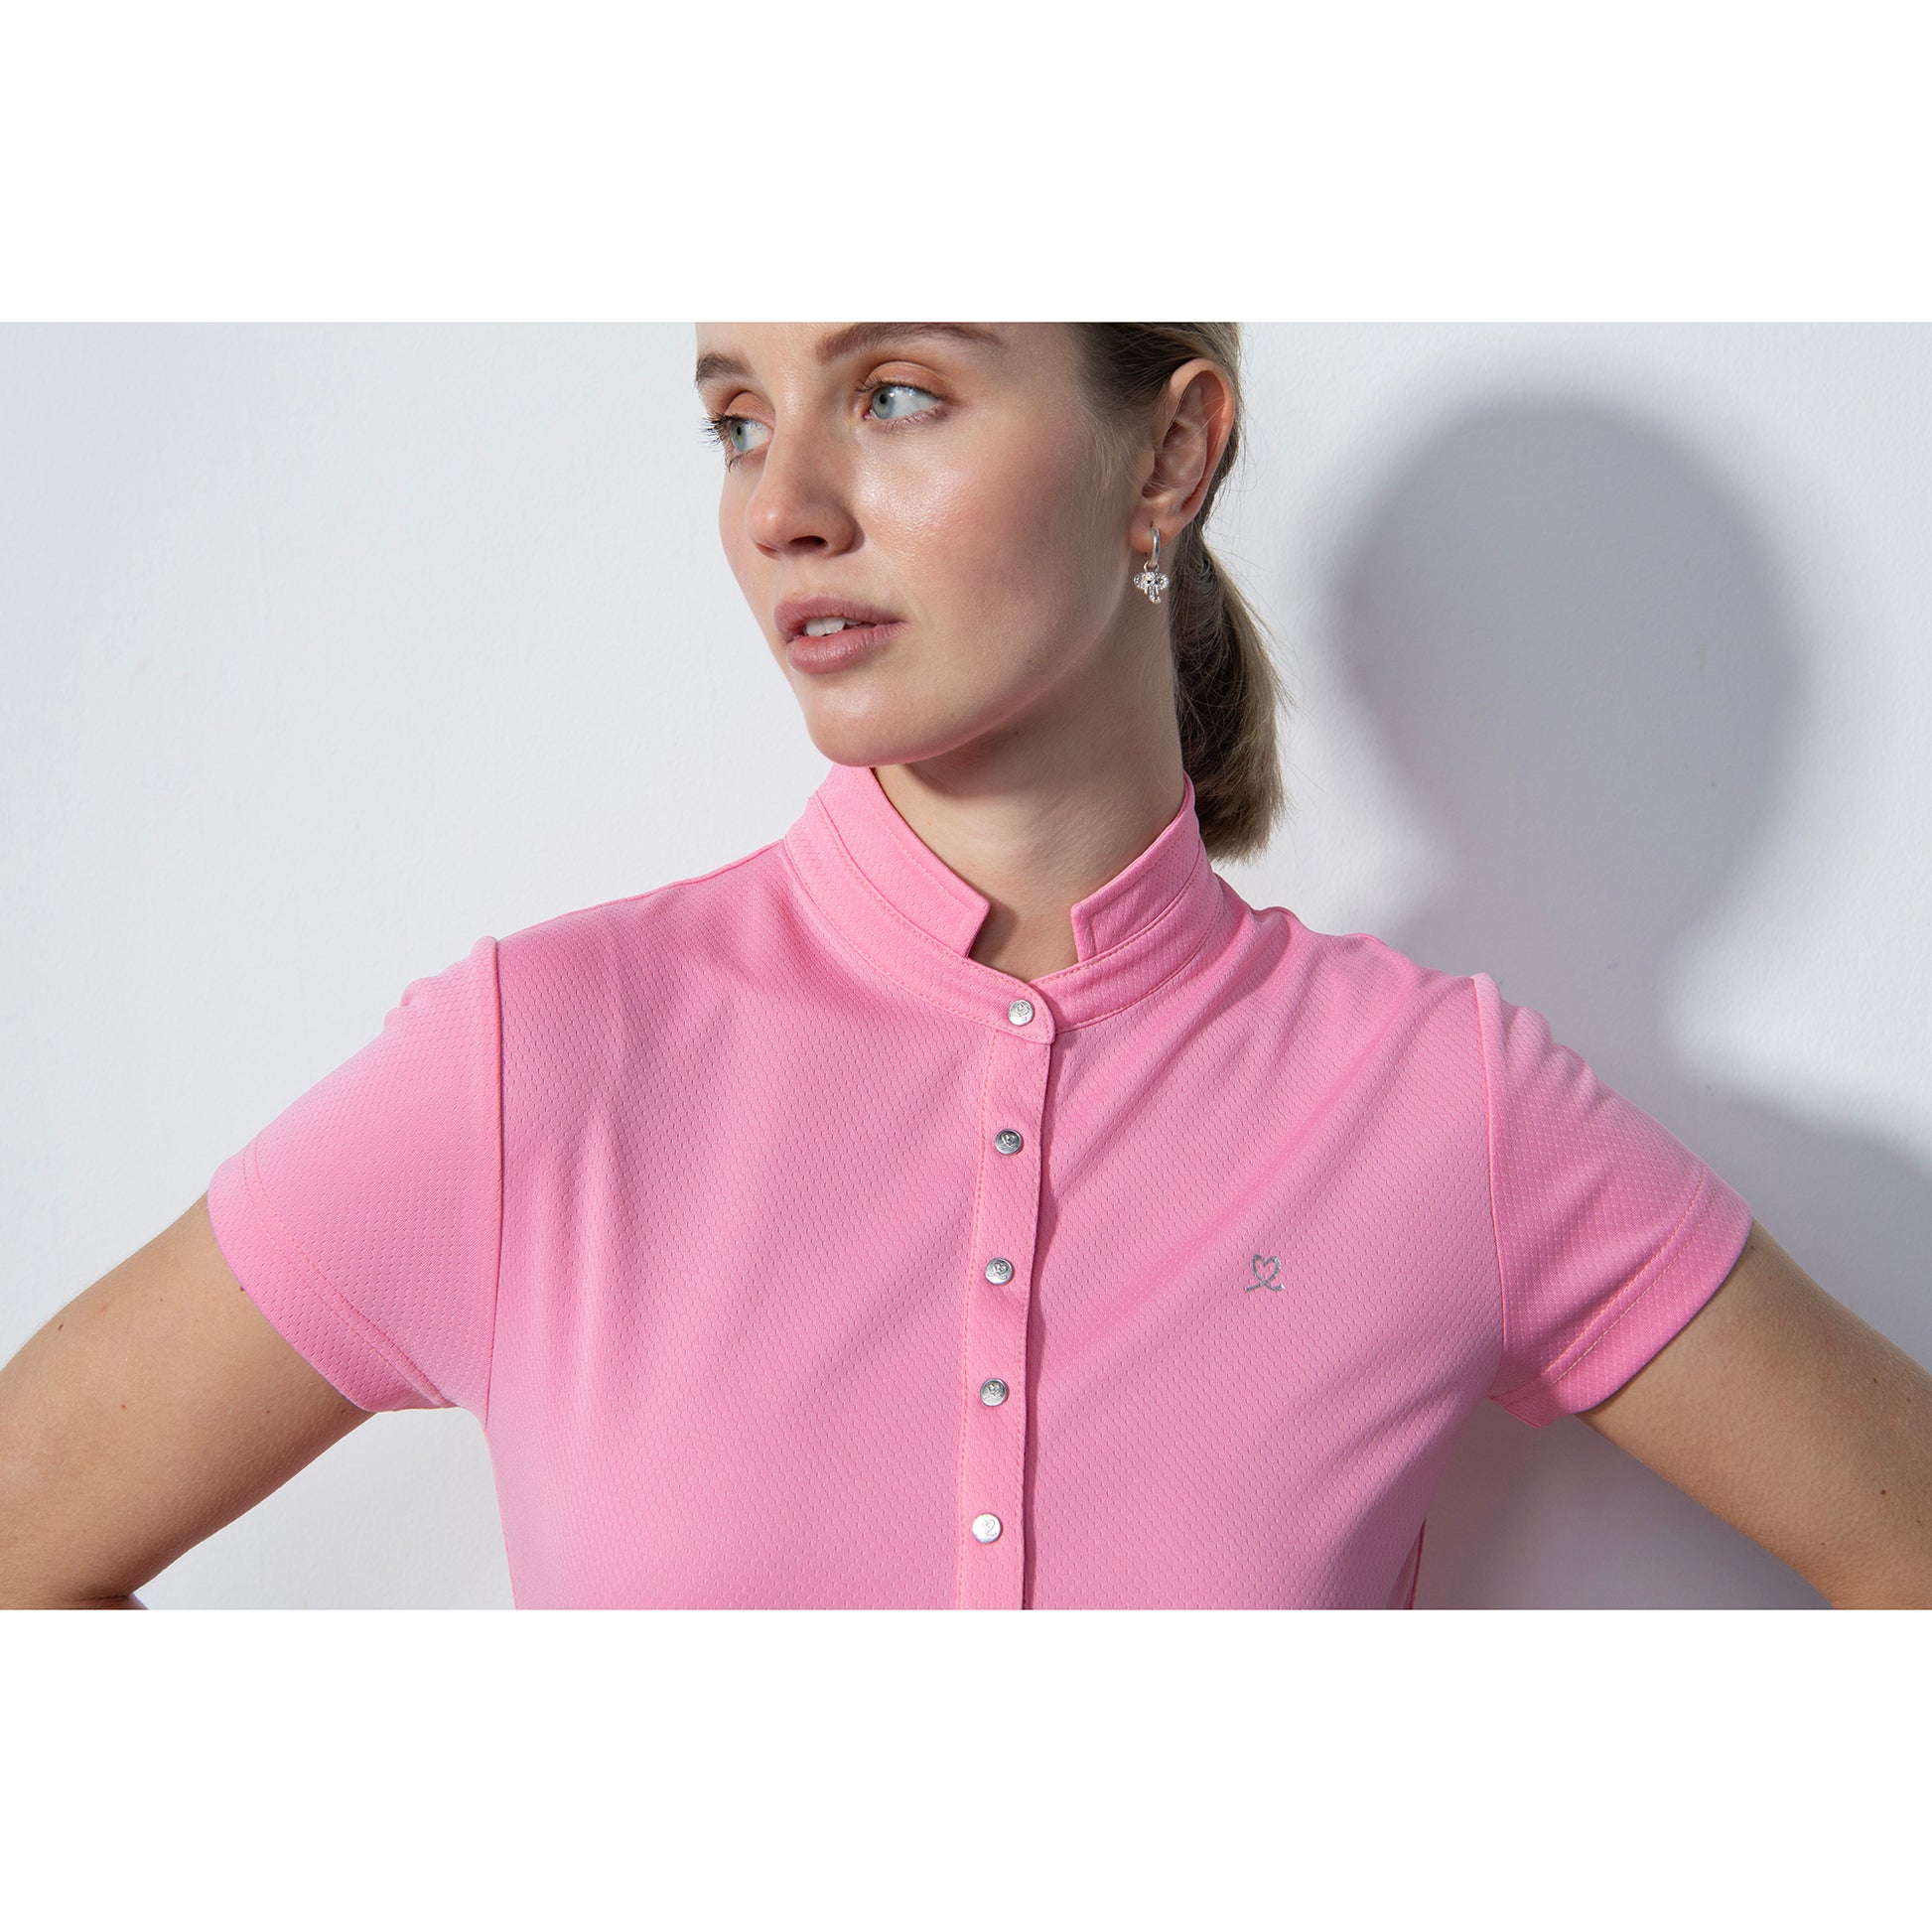 Daily Sports Ladies Cap Sleeve Honeycomb Print Dress in Pink Sky